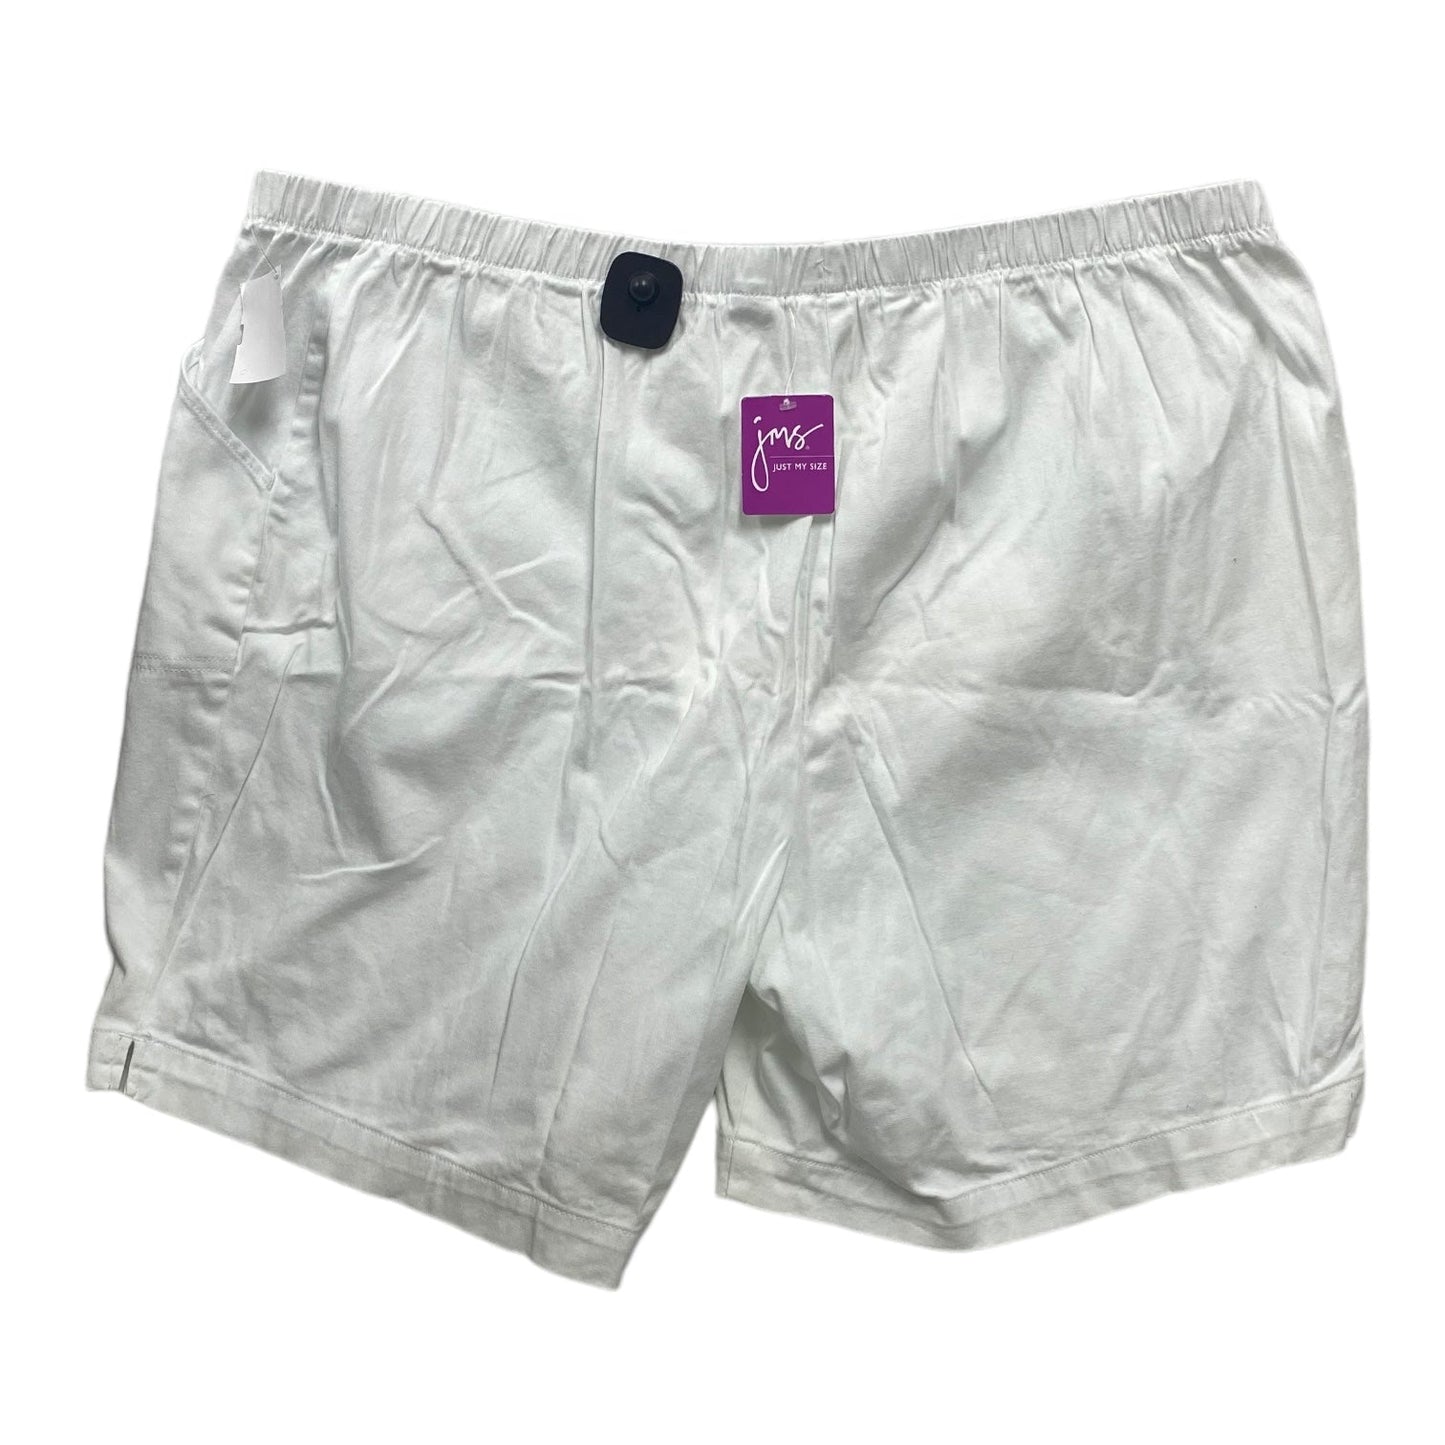 White Shorts jms, Size 4x